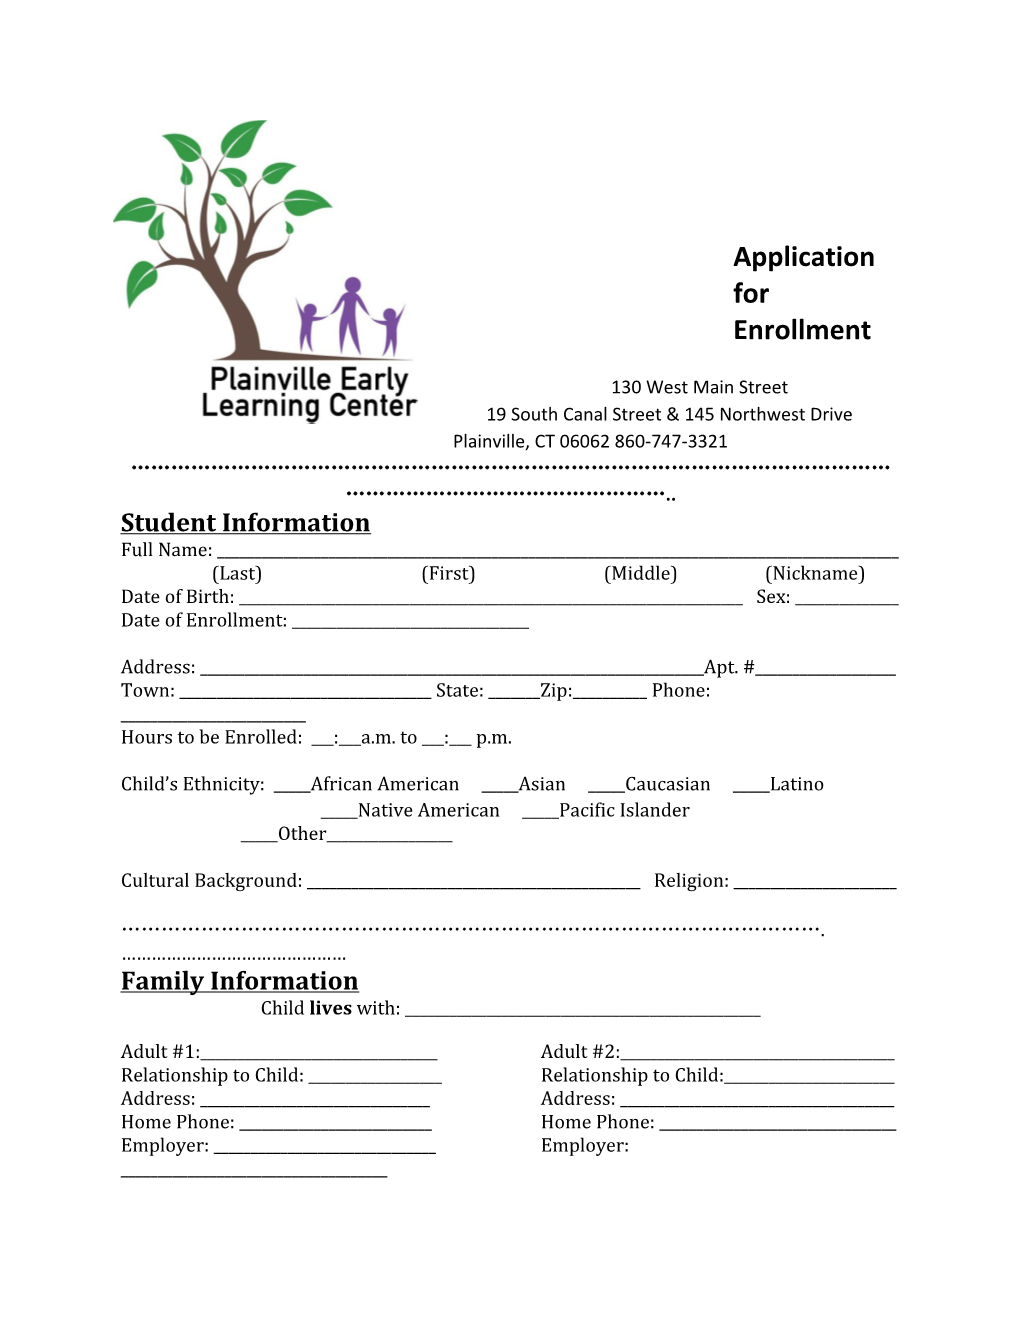 Application for Enrollment